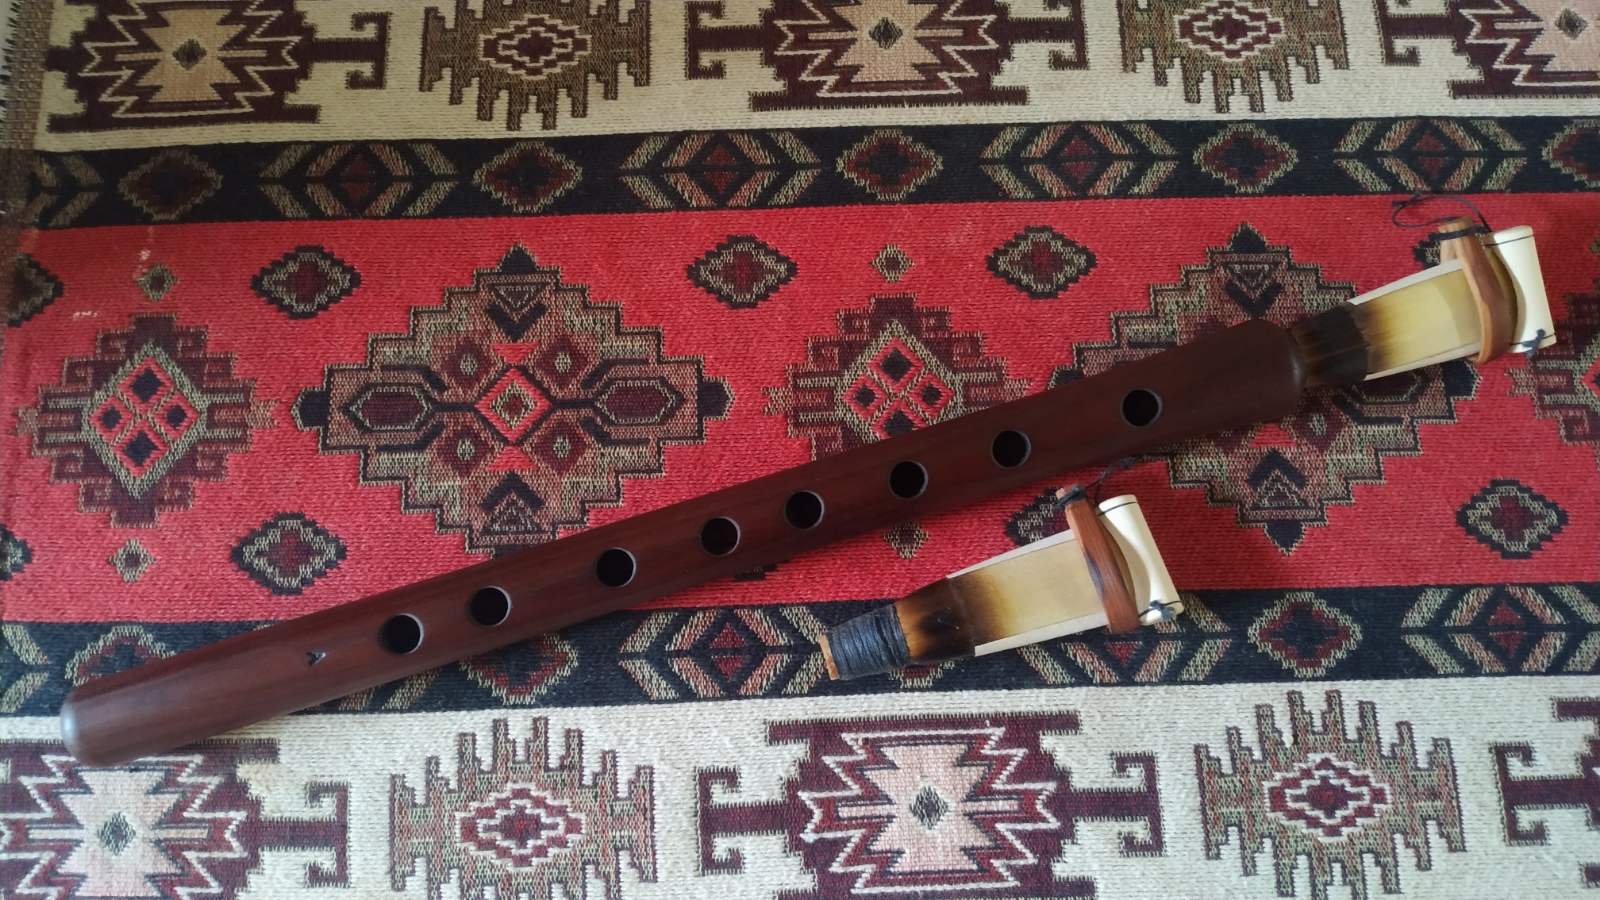 Duduk.am – Armenian Music Instruments Shop